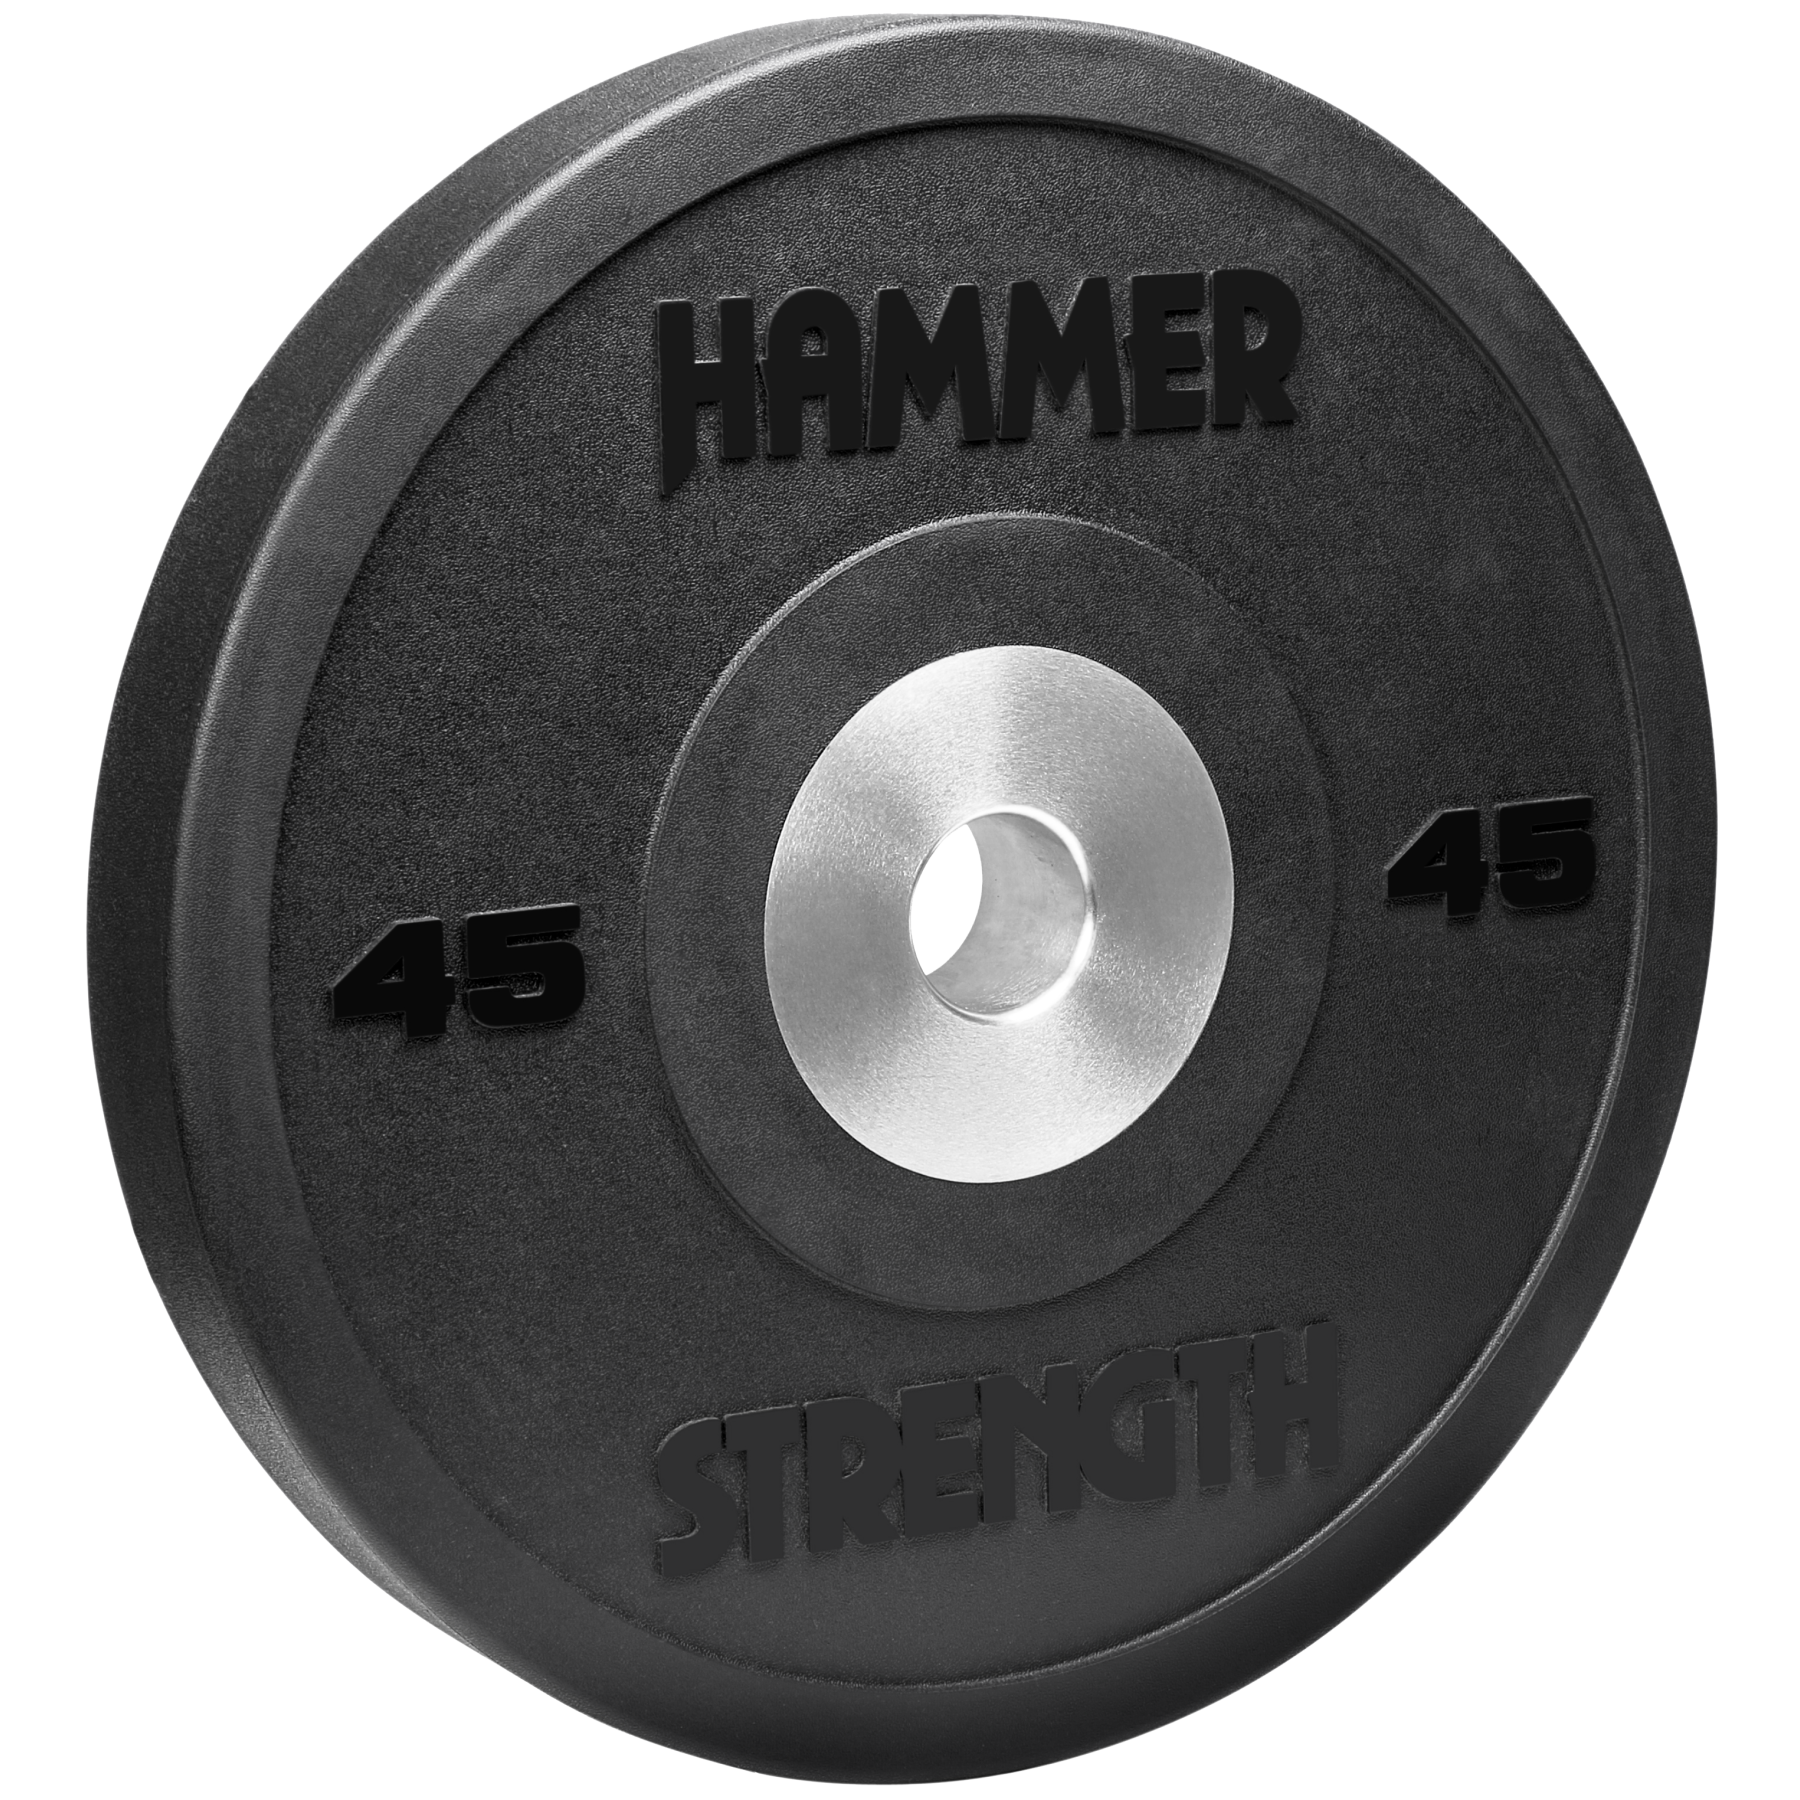 Hammer Strength, Hammer Strength Premium Rubber Black Bumpers